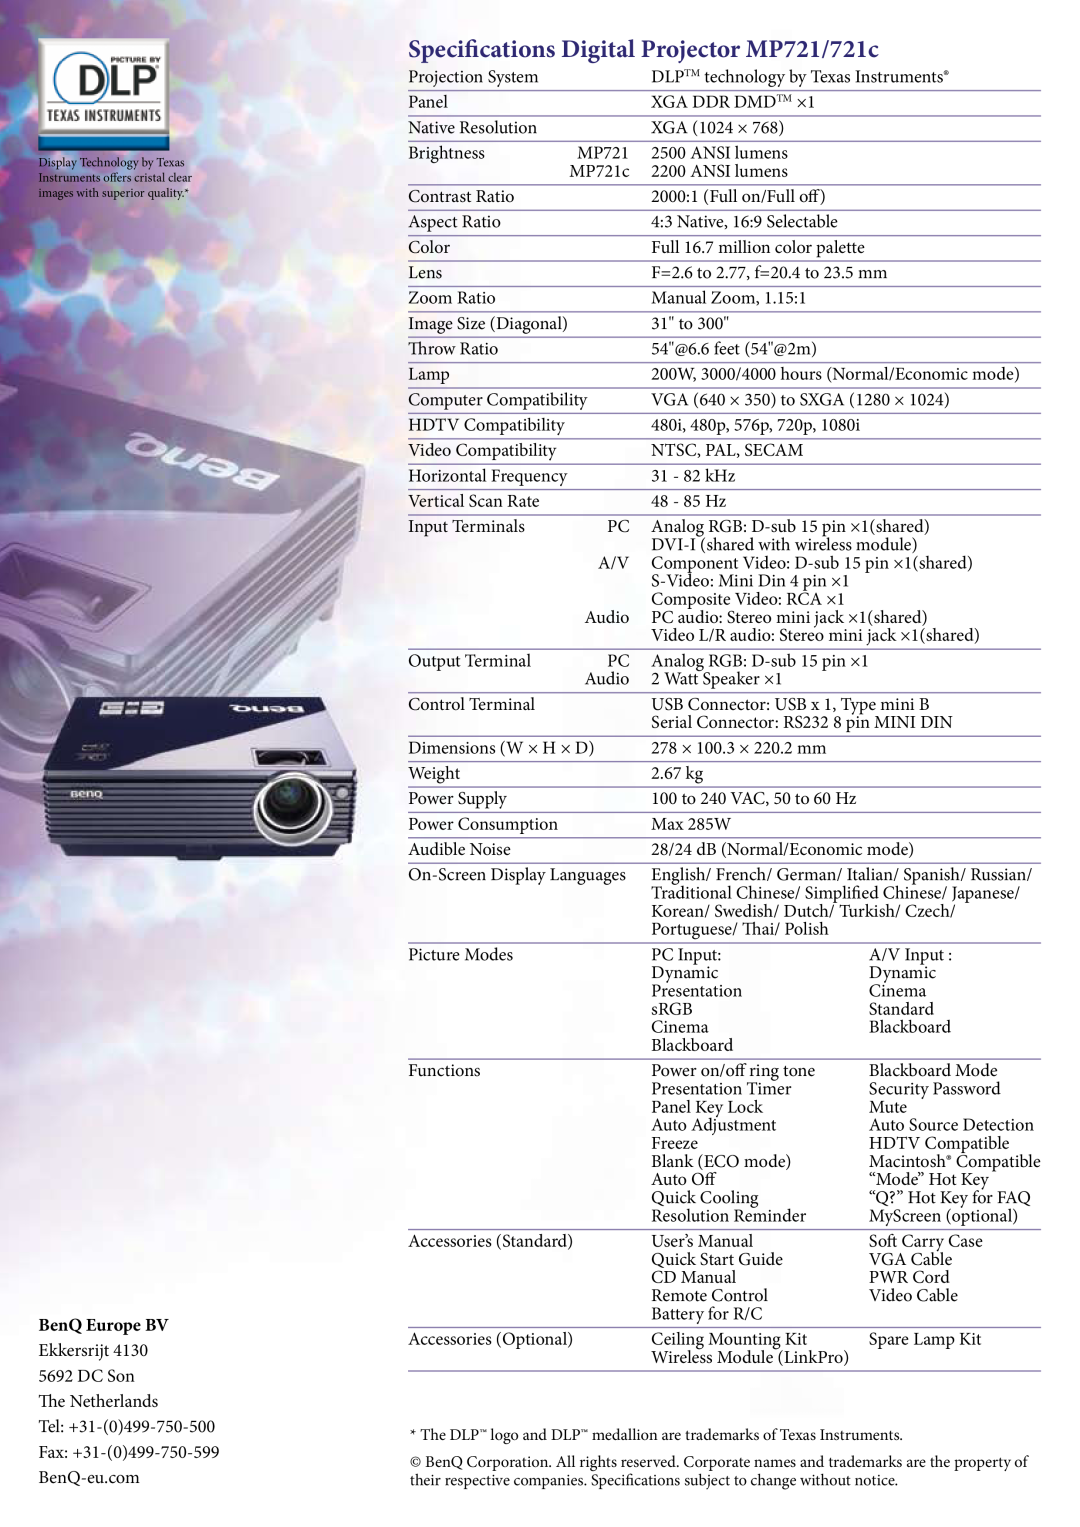 BenQ manual Specifications Digital Projector MP721/721c, BenQ Europe BV 